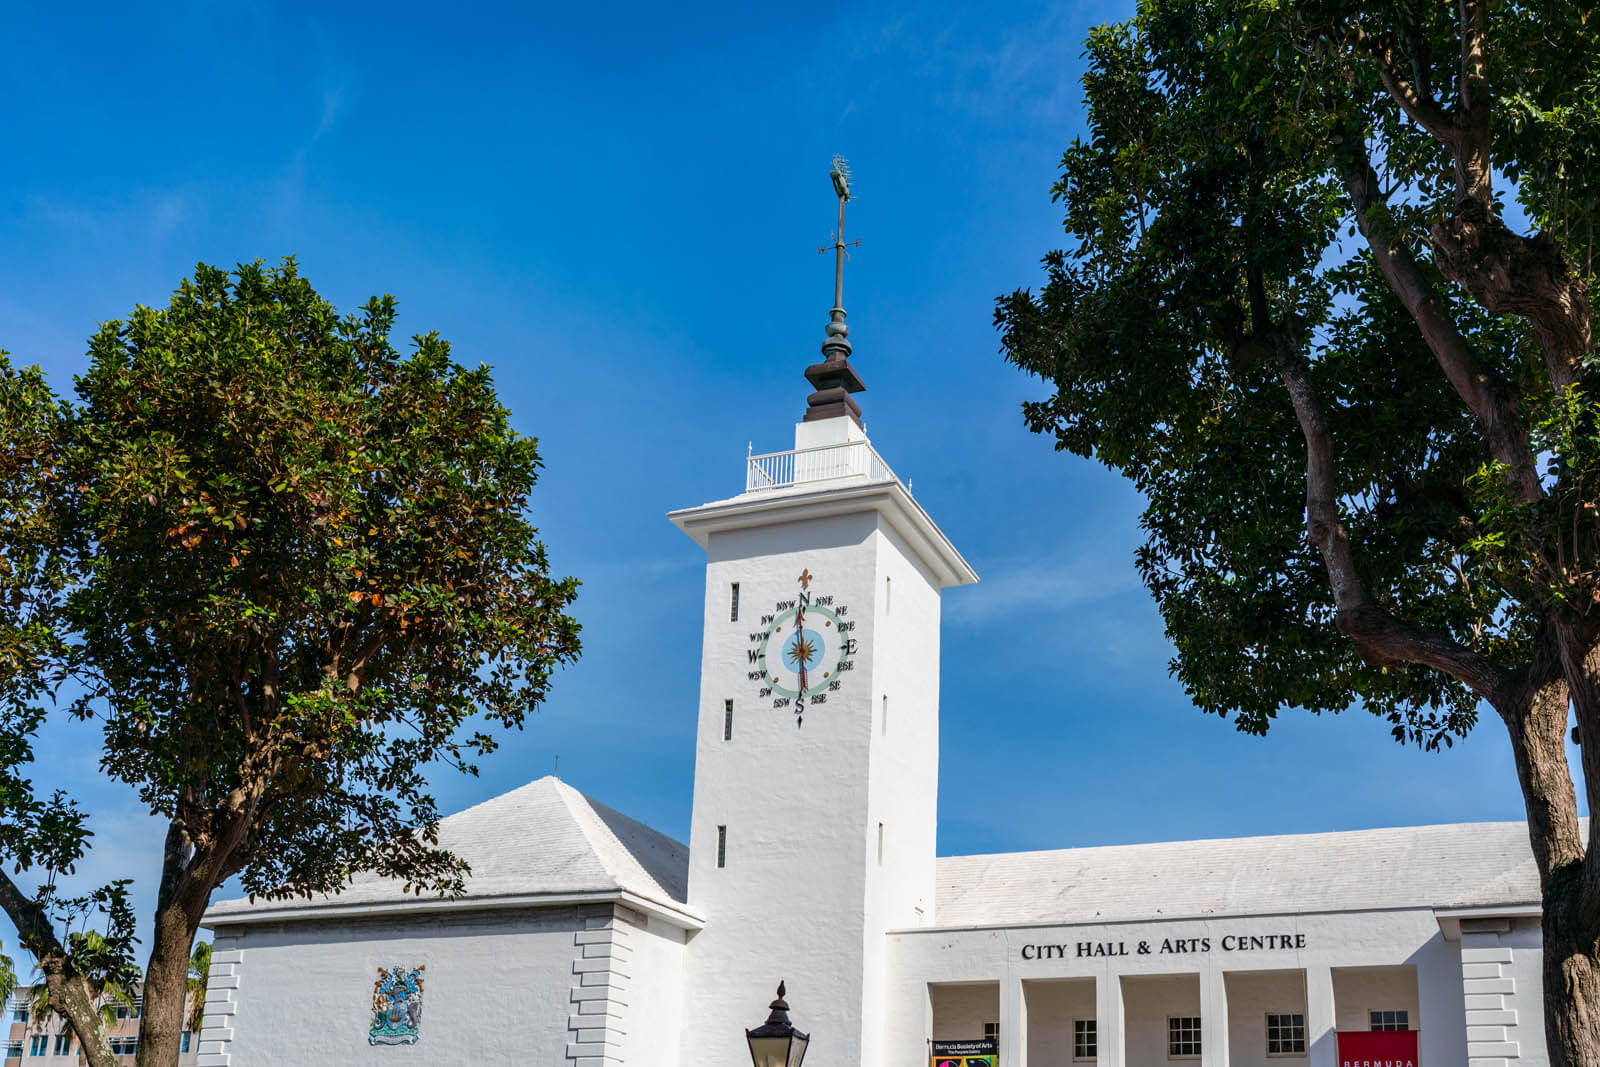 Hamilton City Hall clocktower in Bermuda